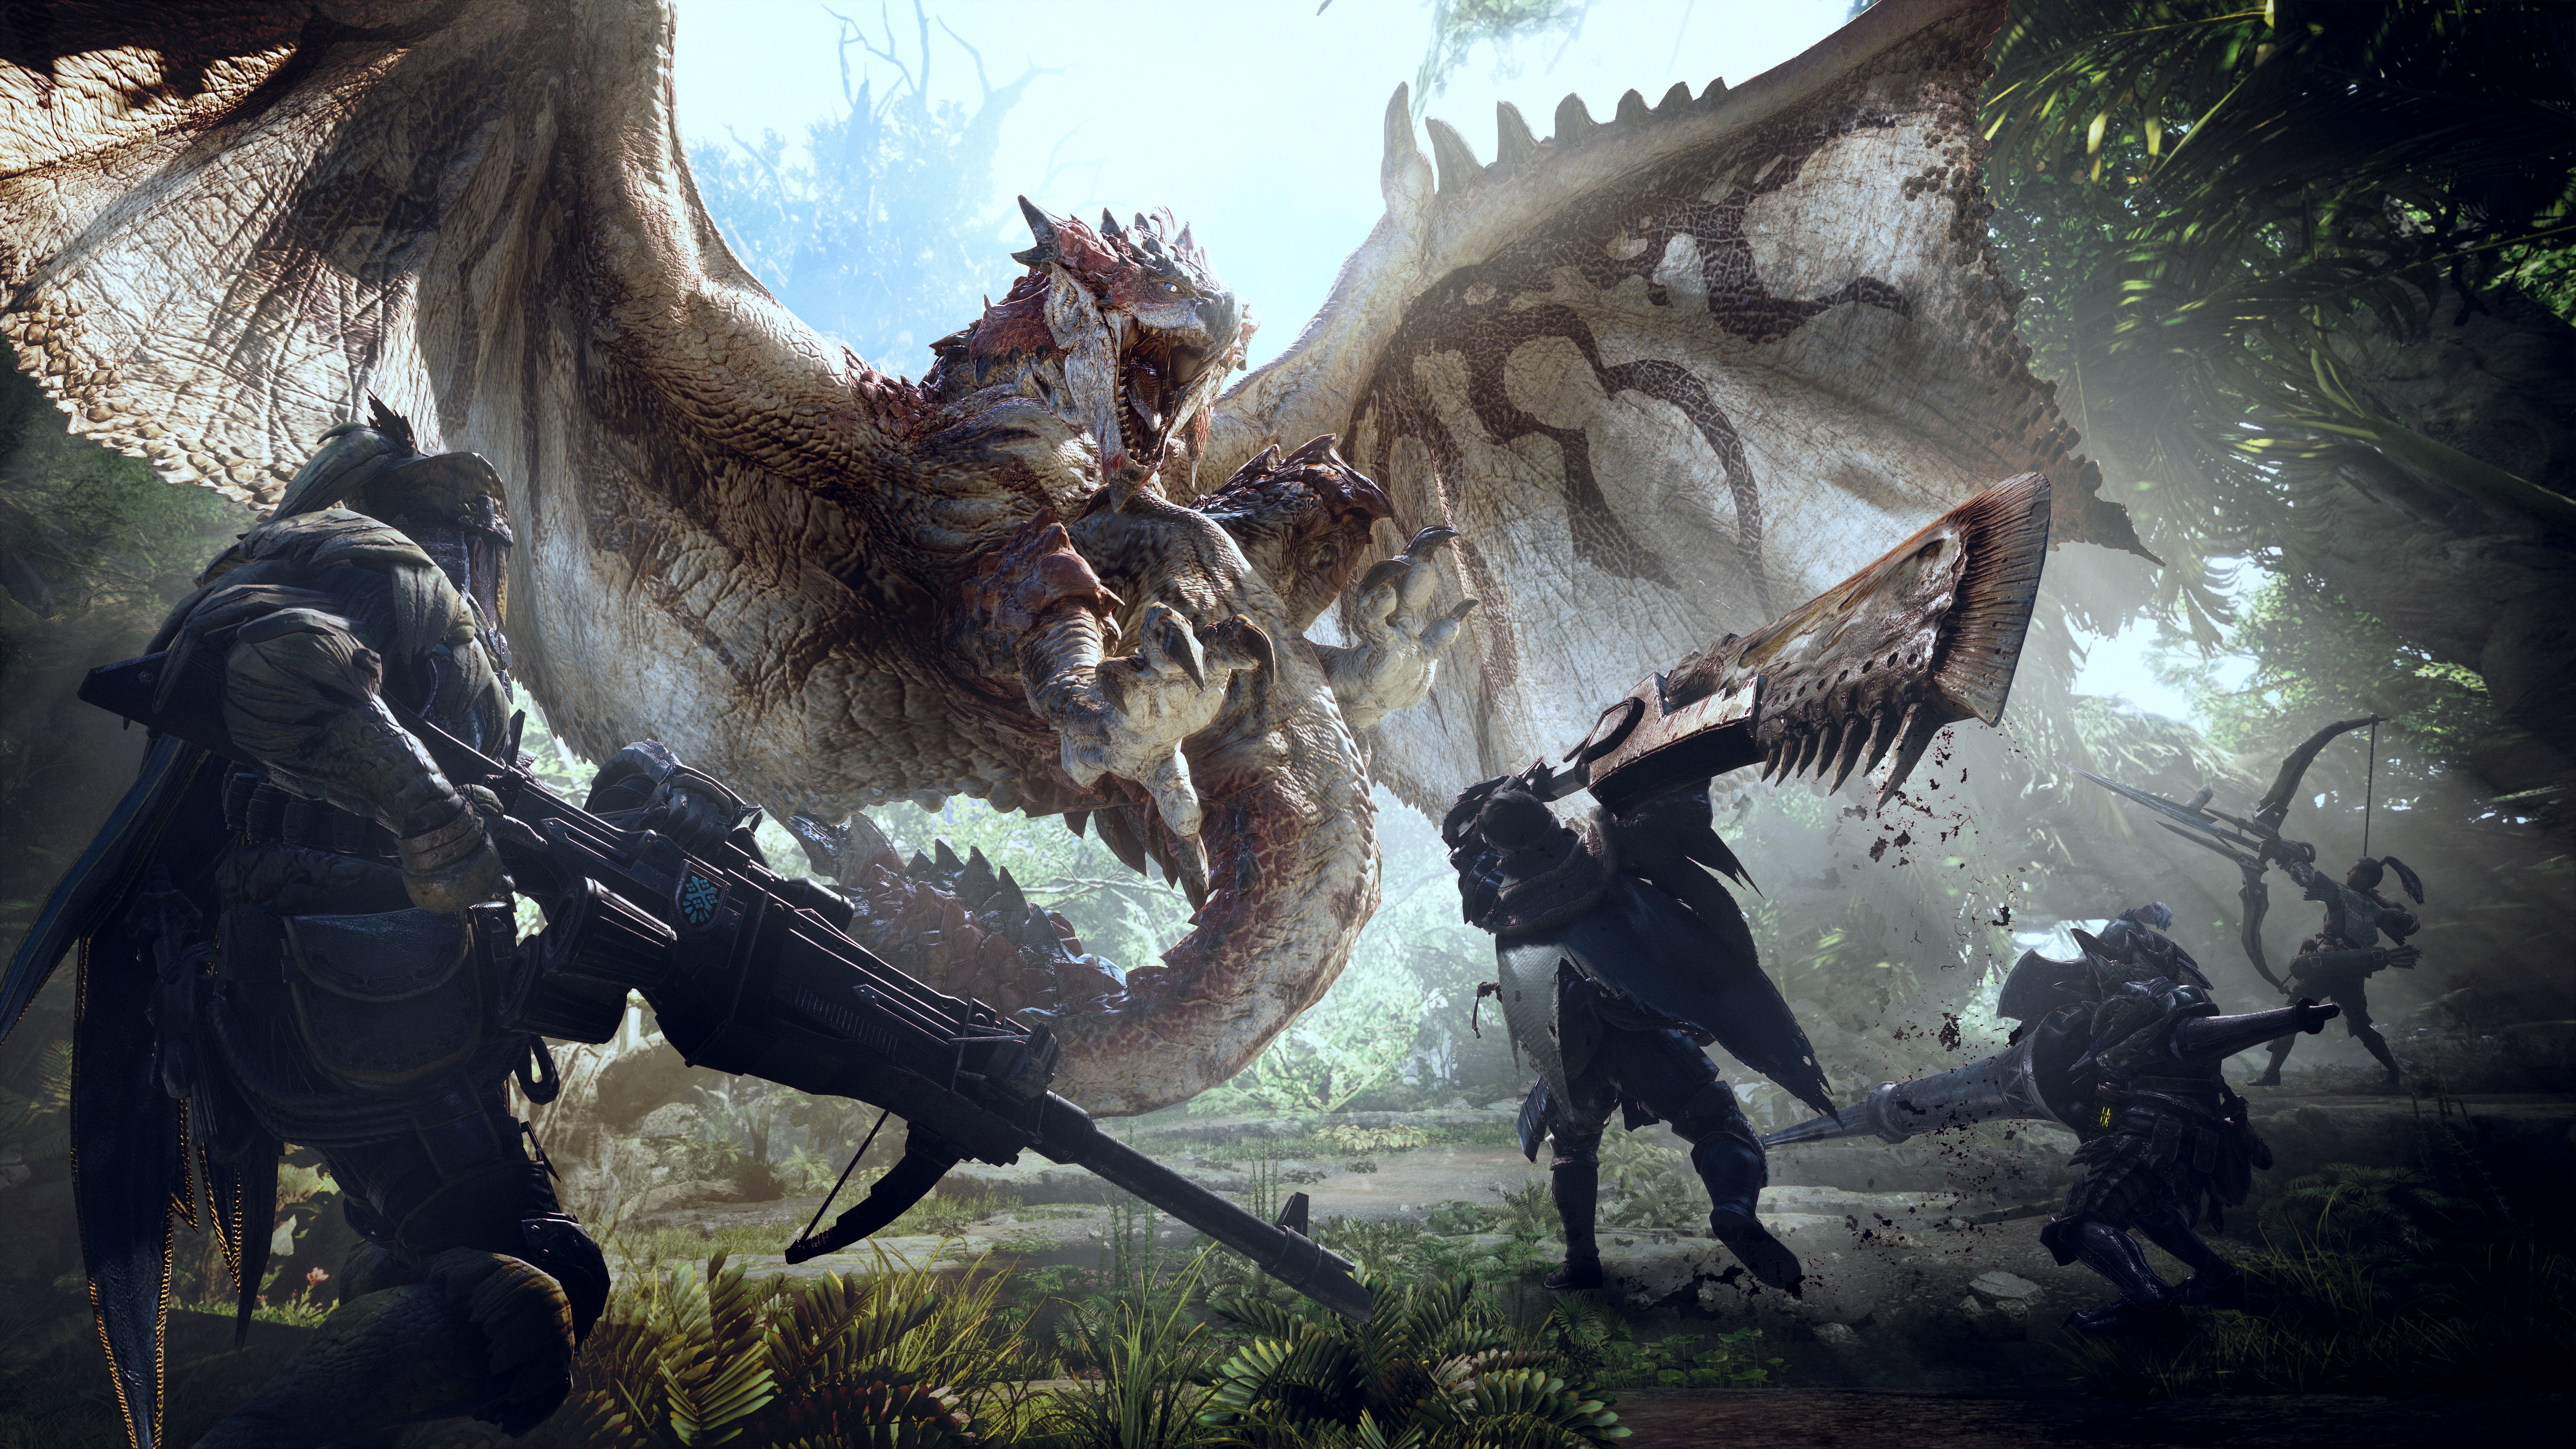 monster hunter wallpaper,action adventure game,dragon,fictional character,cg artwork,adventure game